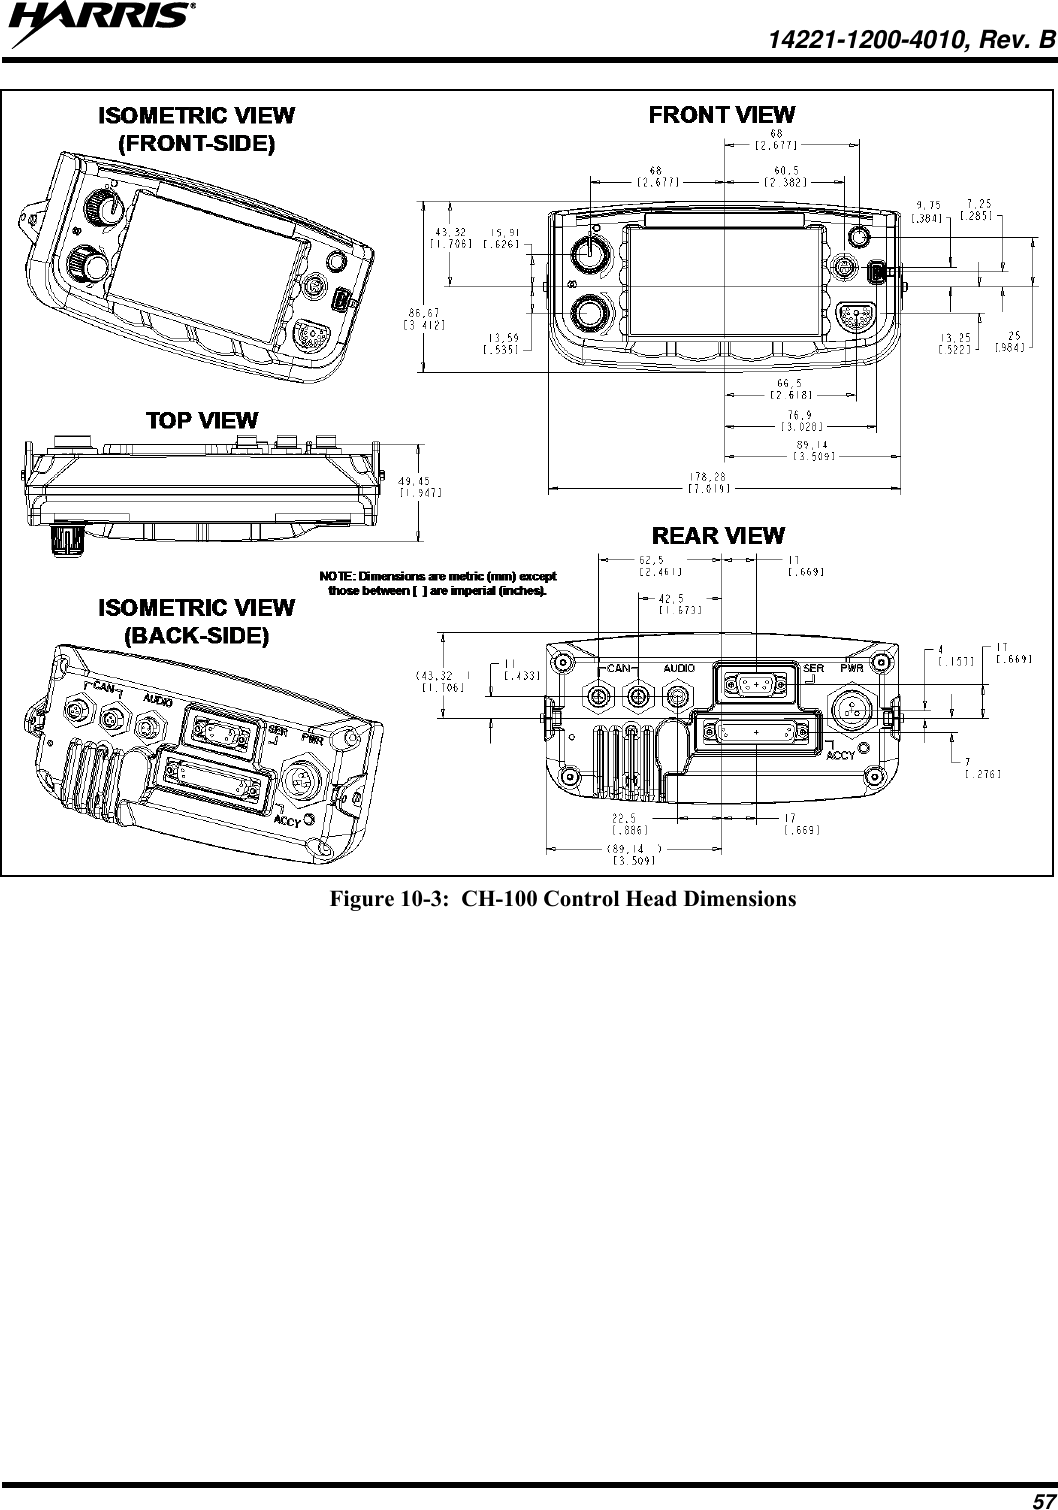   14221-1200-4010, Rev. B 57  Figure 10-3:  CH-100 Control Head Dimensions 